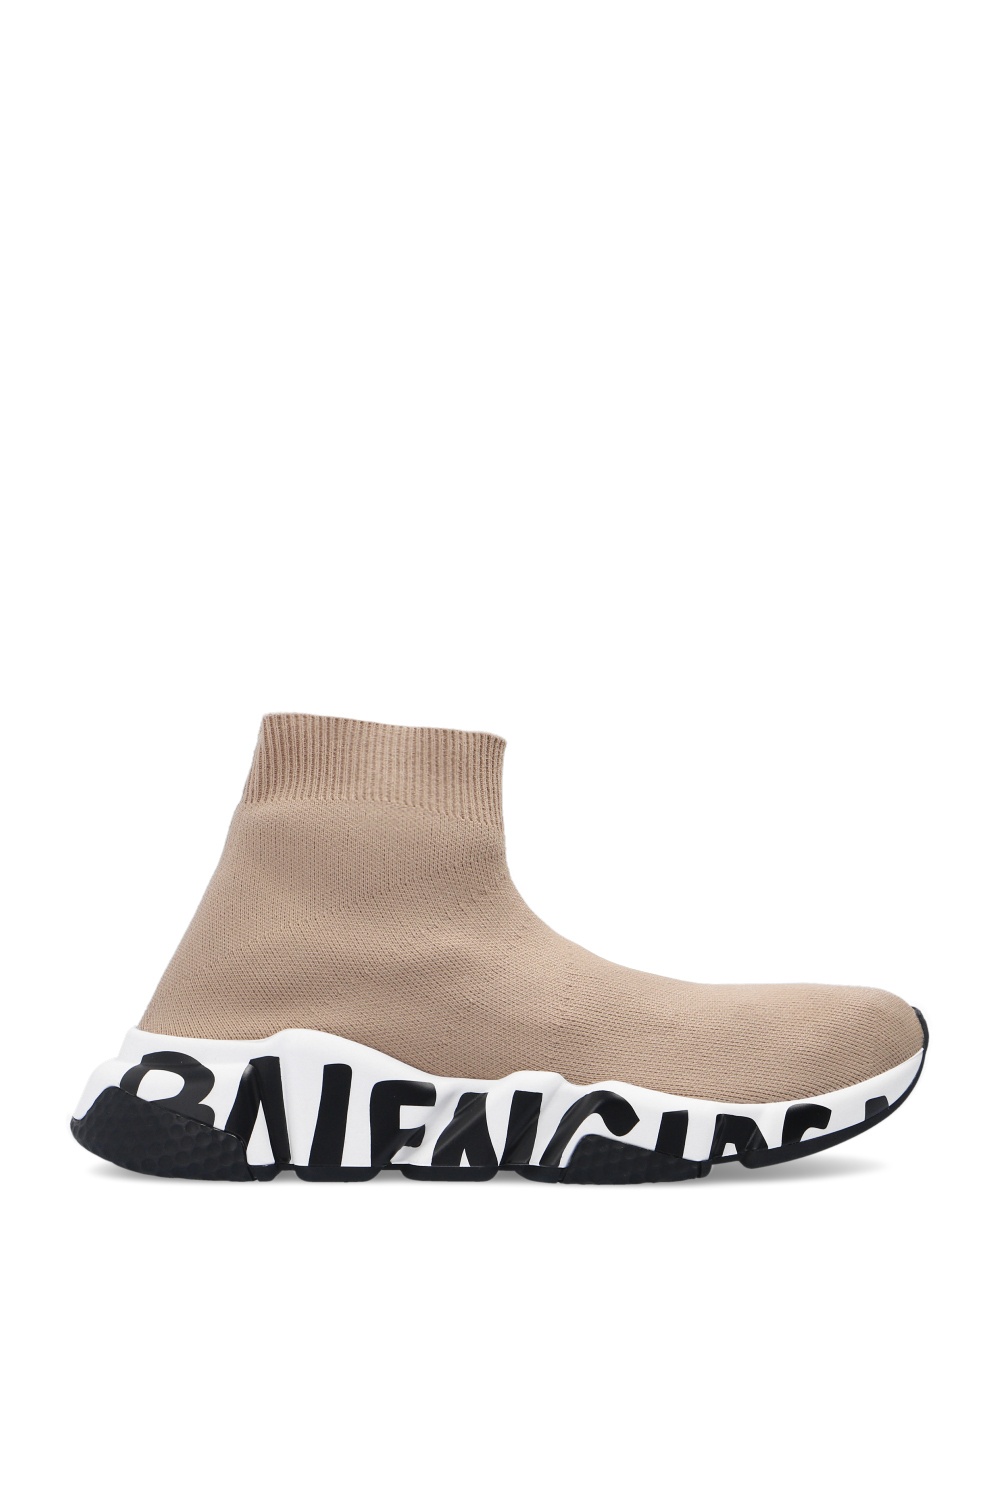 Balenciaga x Croc Rubber Rain Boots  Neiman Marcus